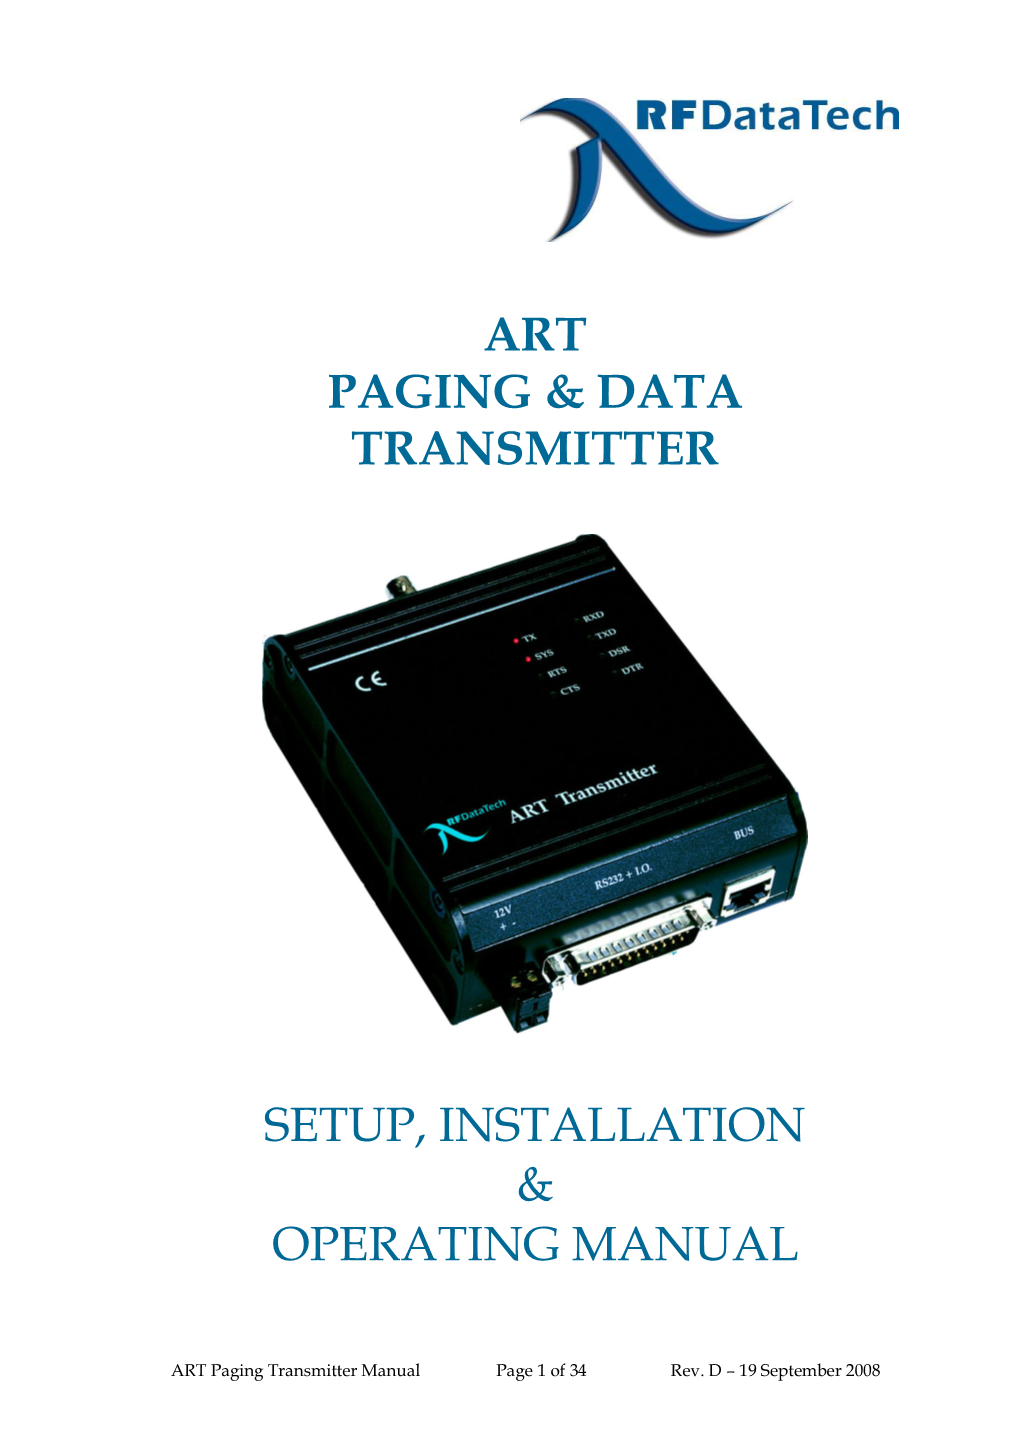 ART Paging Transmitter Manual (Rev D)